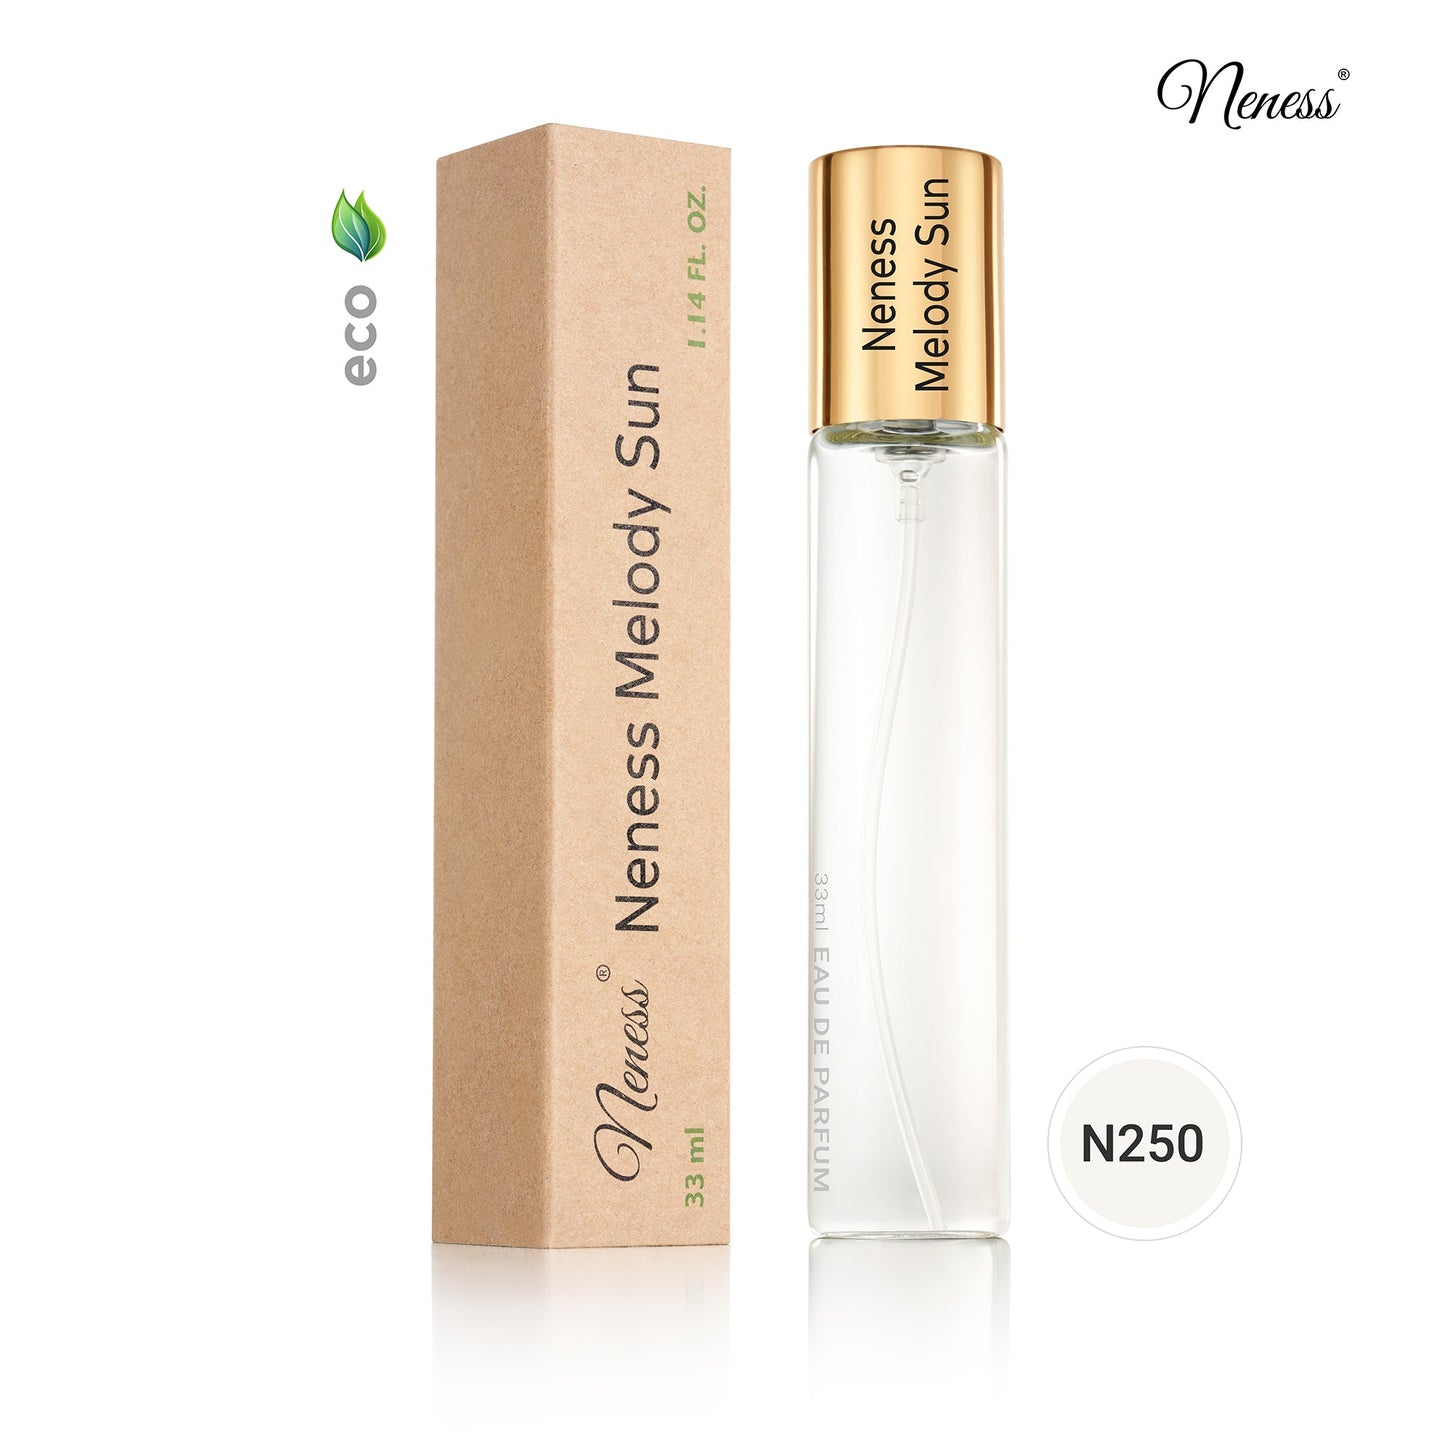 N250. Neness Melody Sun - 33 ml - Parfums unisexes